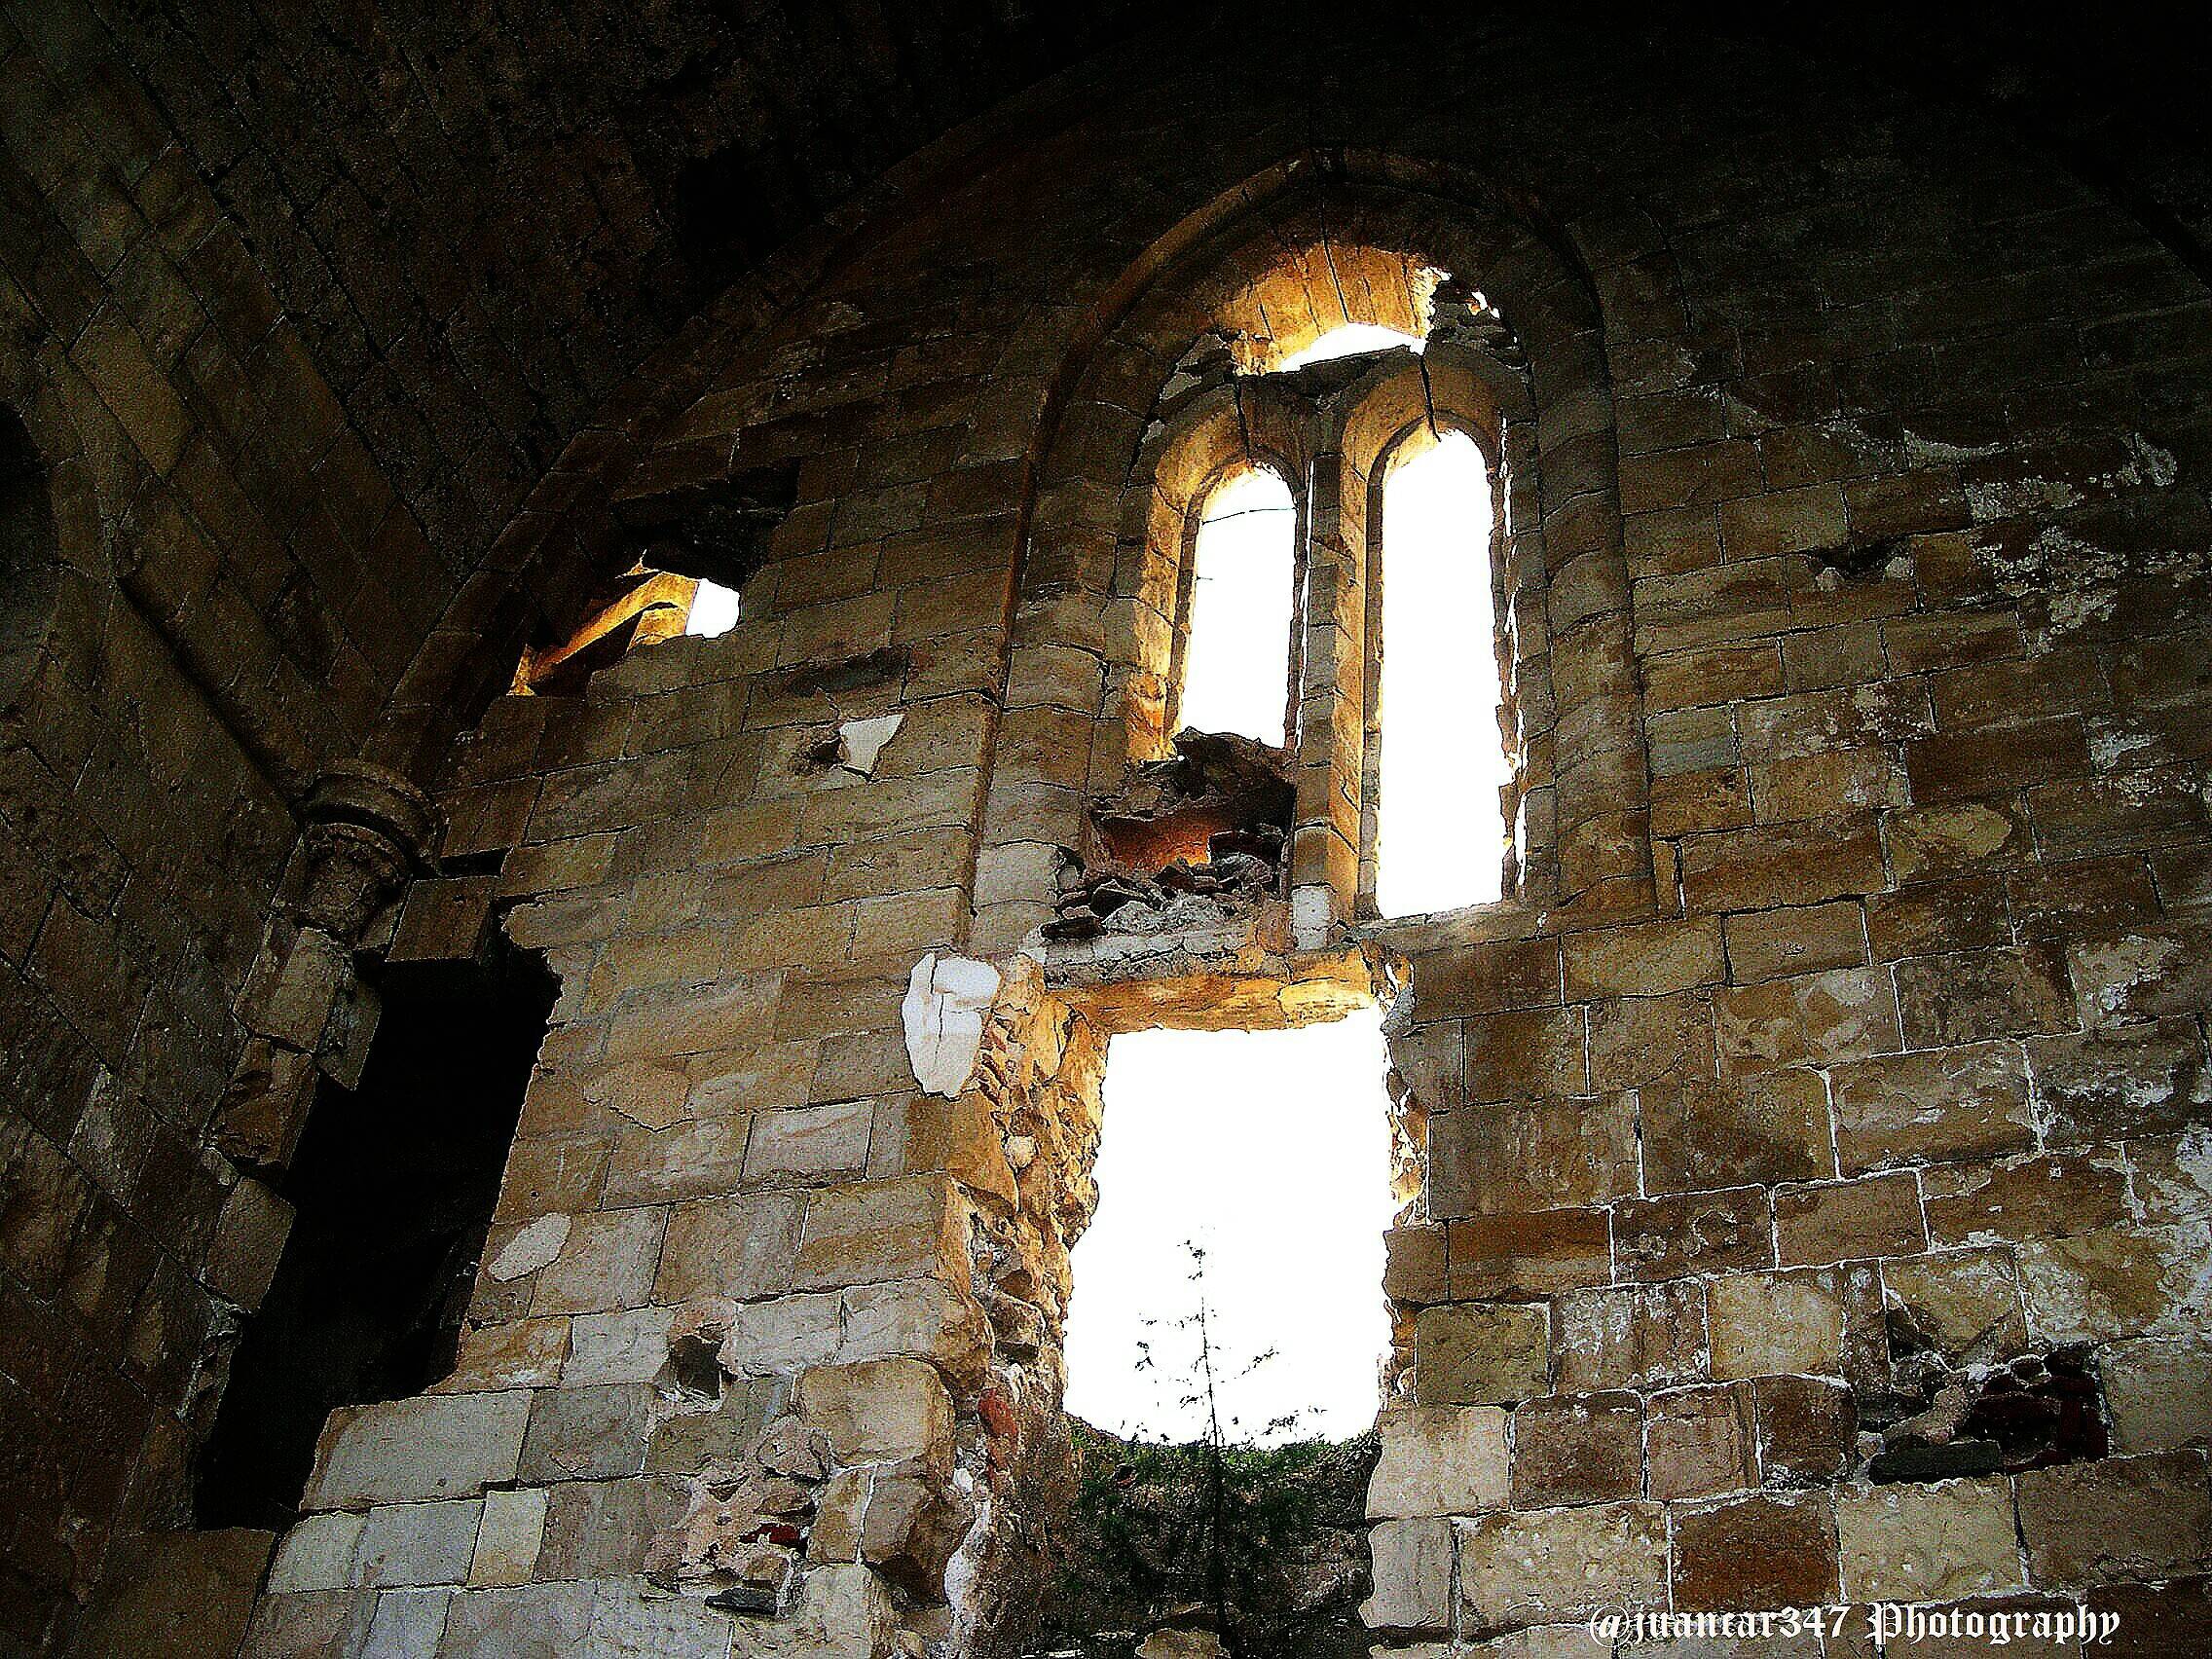 Bonabal, the mysterious ruins of a Cistercian monastery